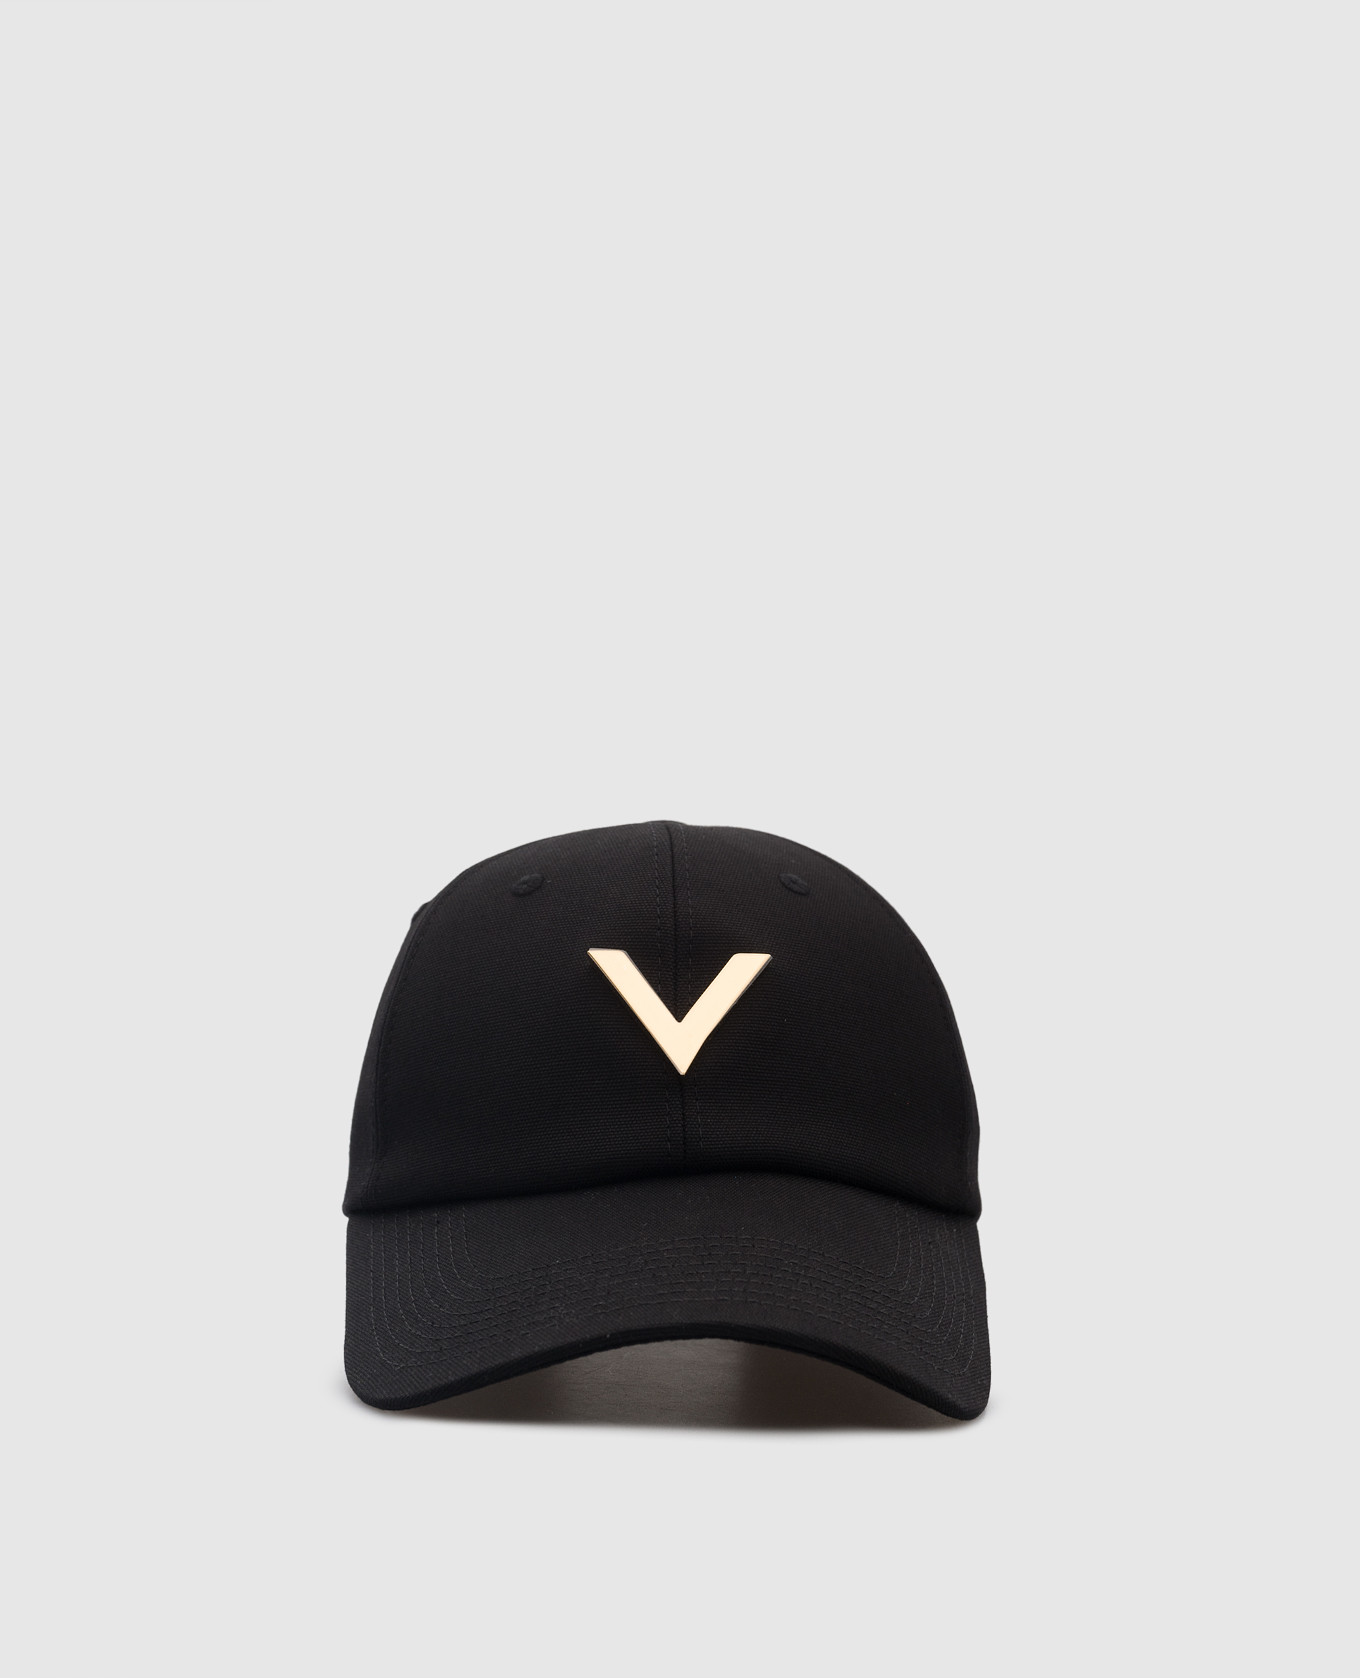 Black cap with metal V logo